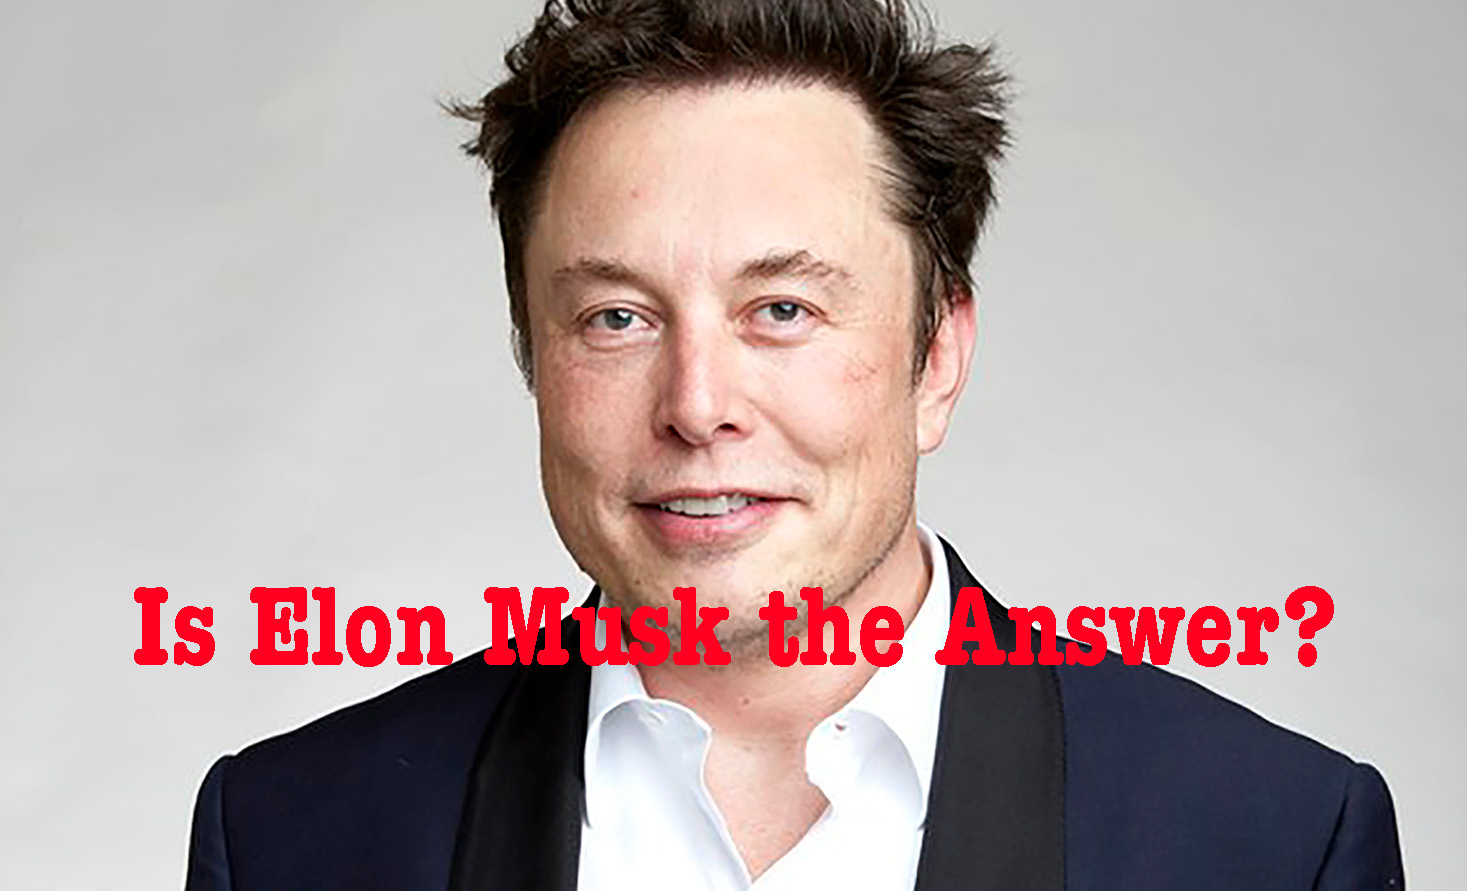 Elon Musk Has Chosen Freedom of Speech